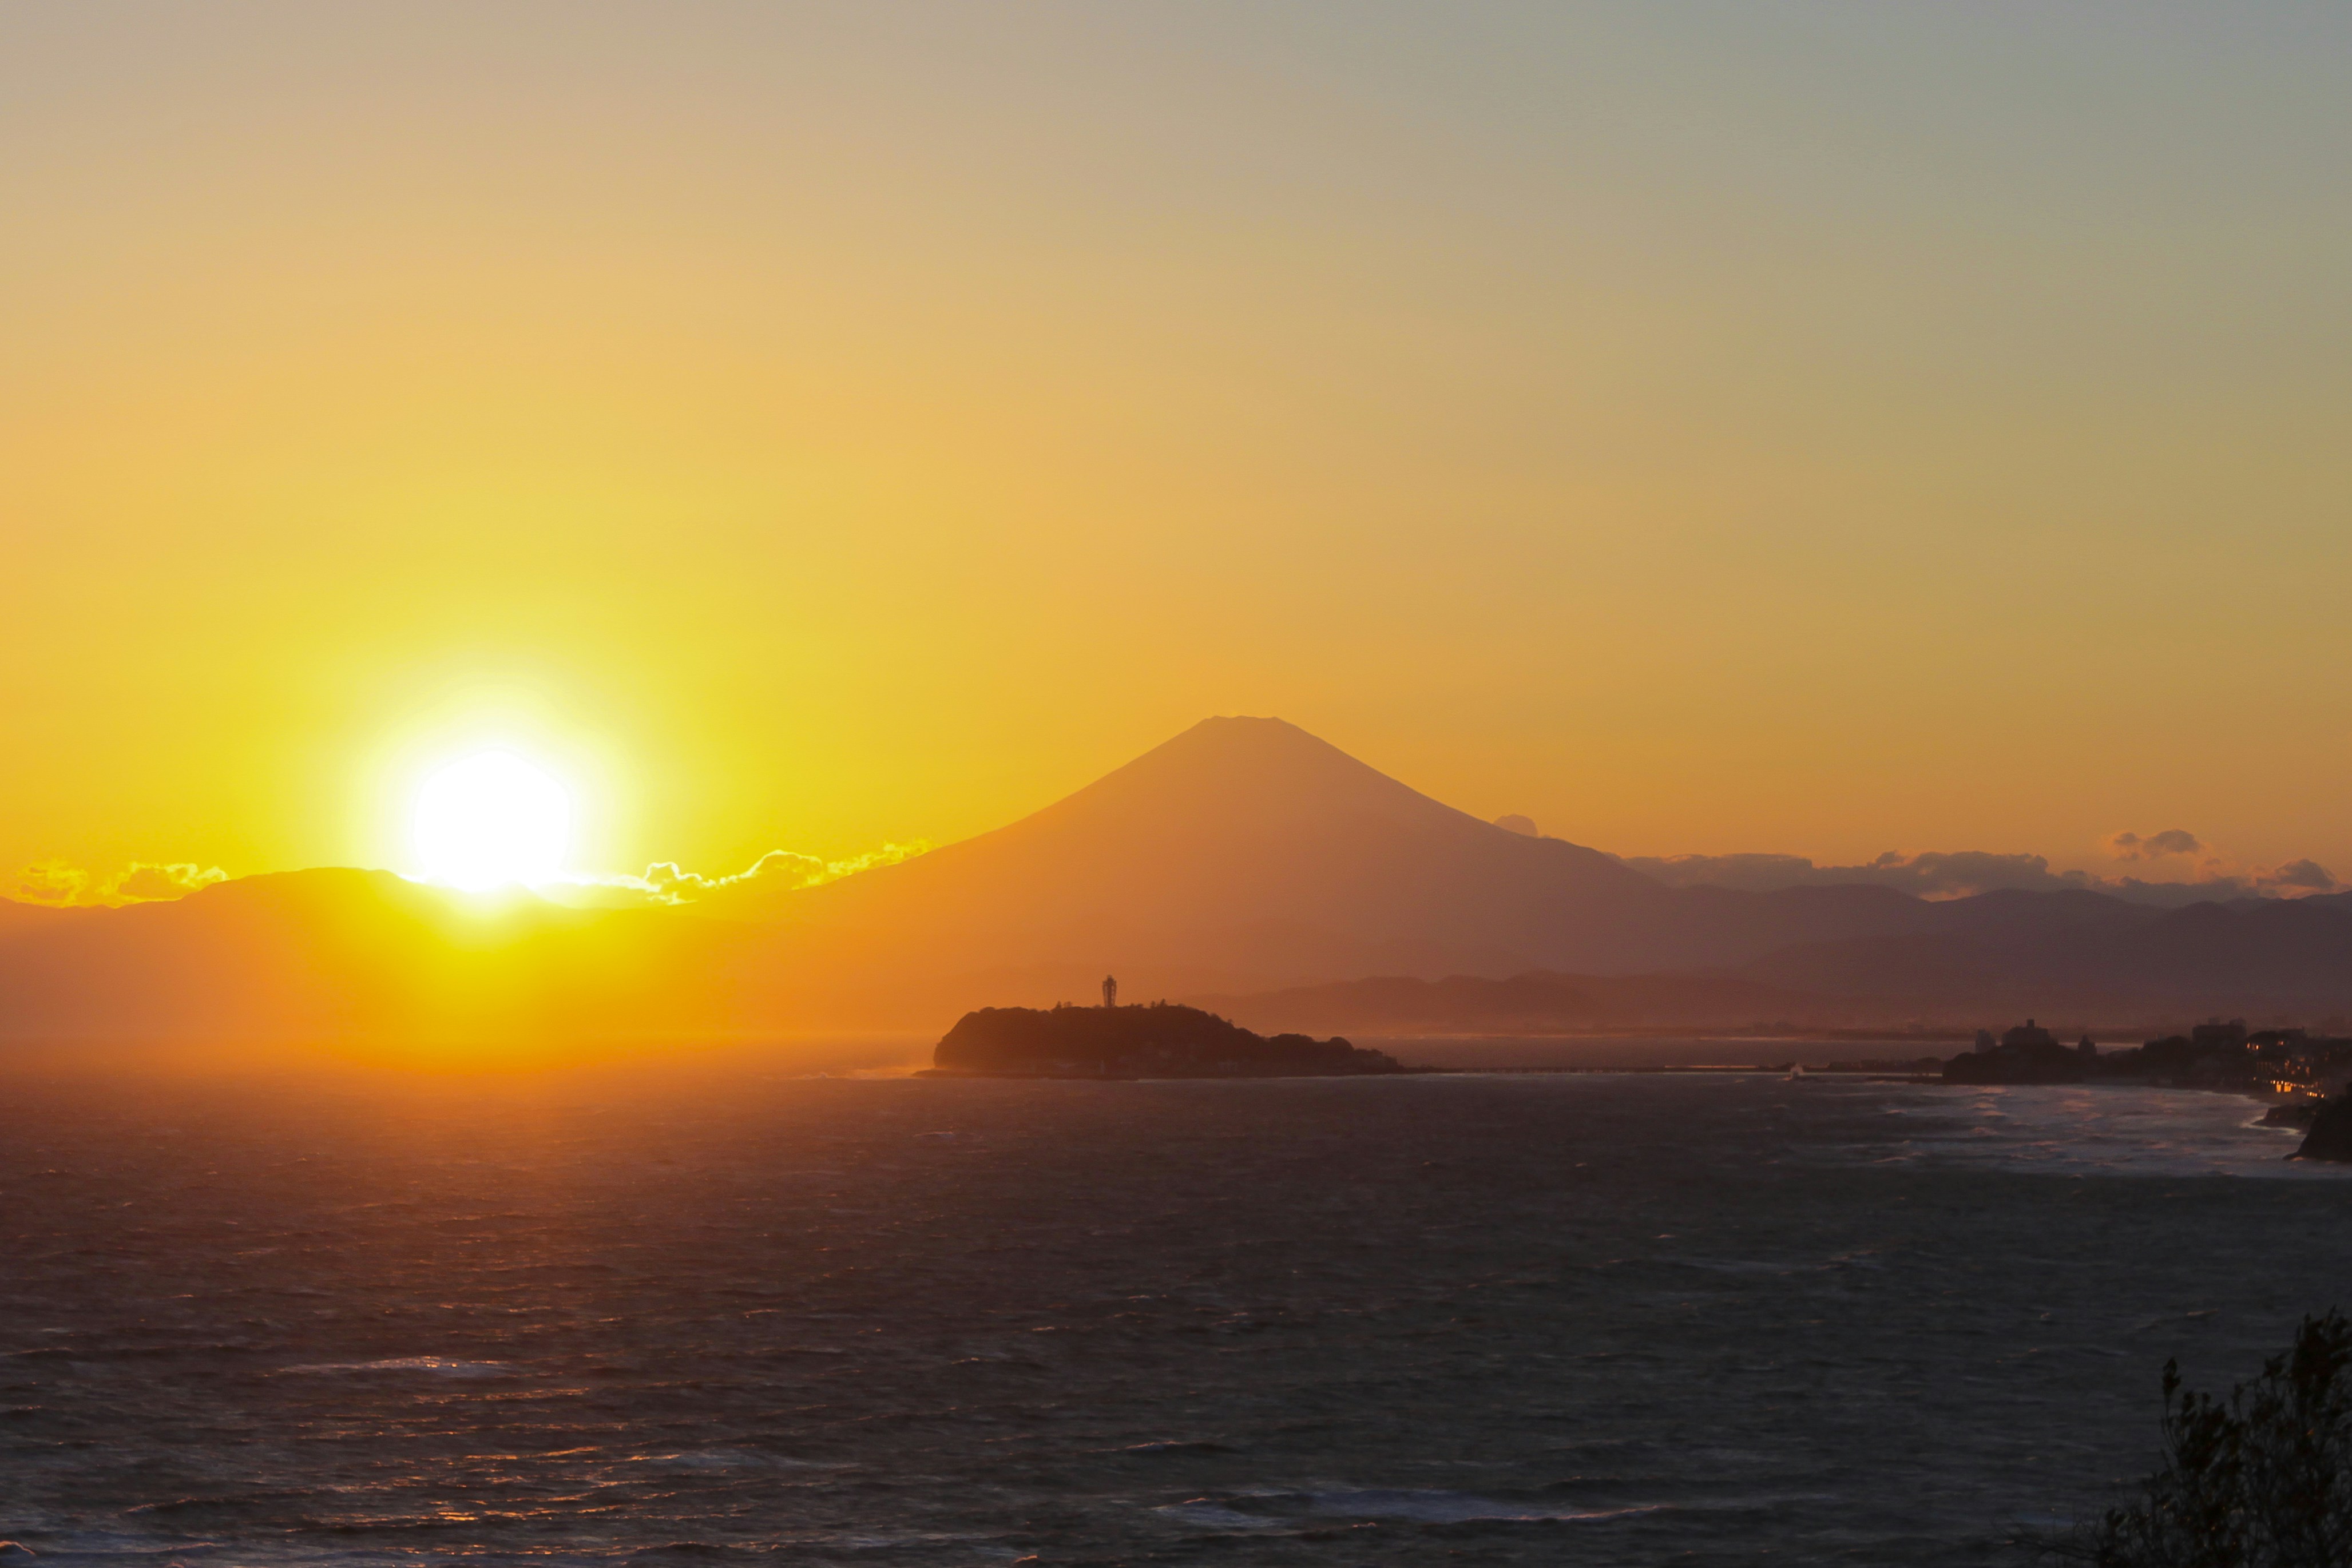 The sunset with Mt.Fuji and Enoshima island.